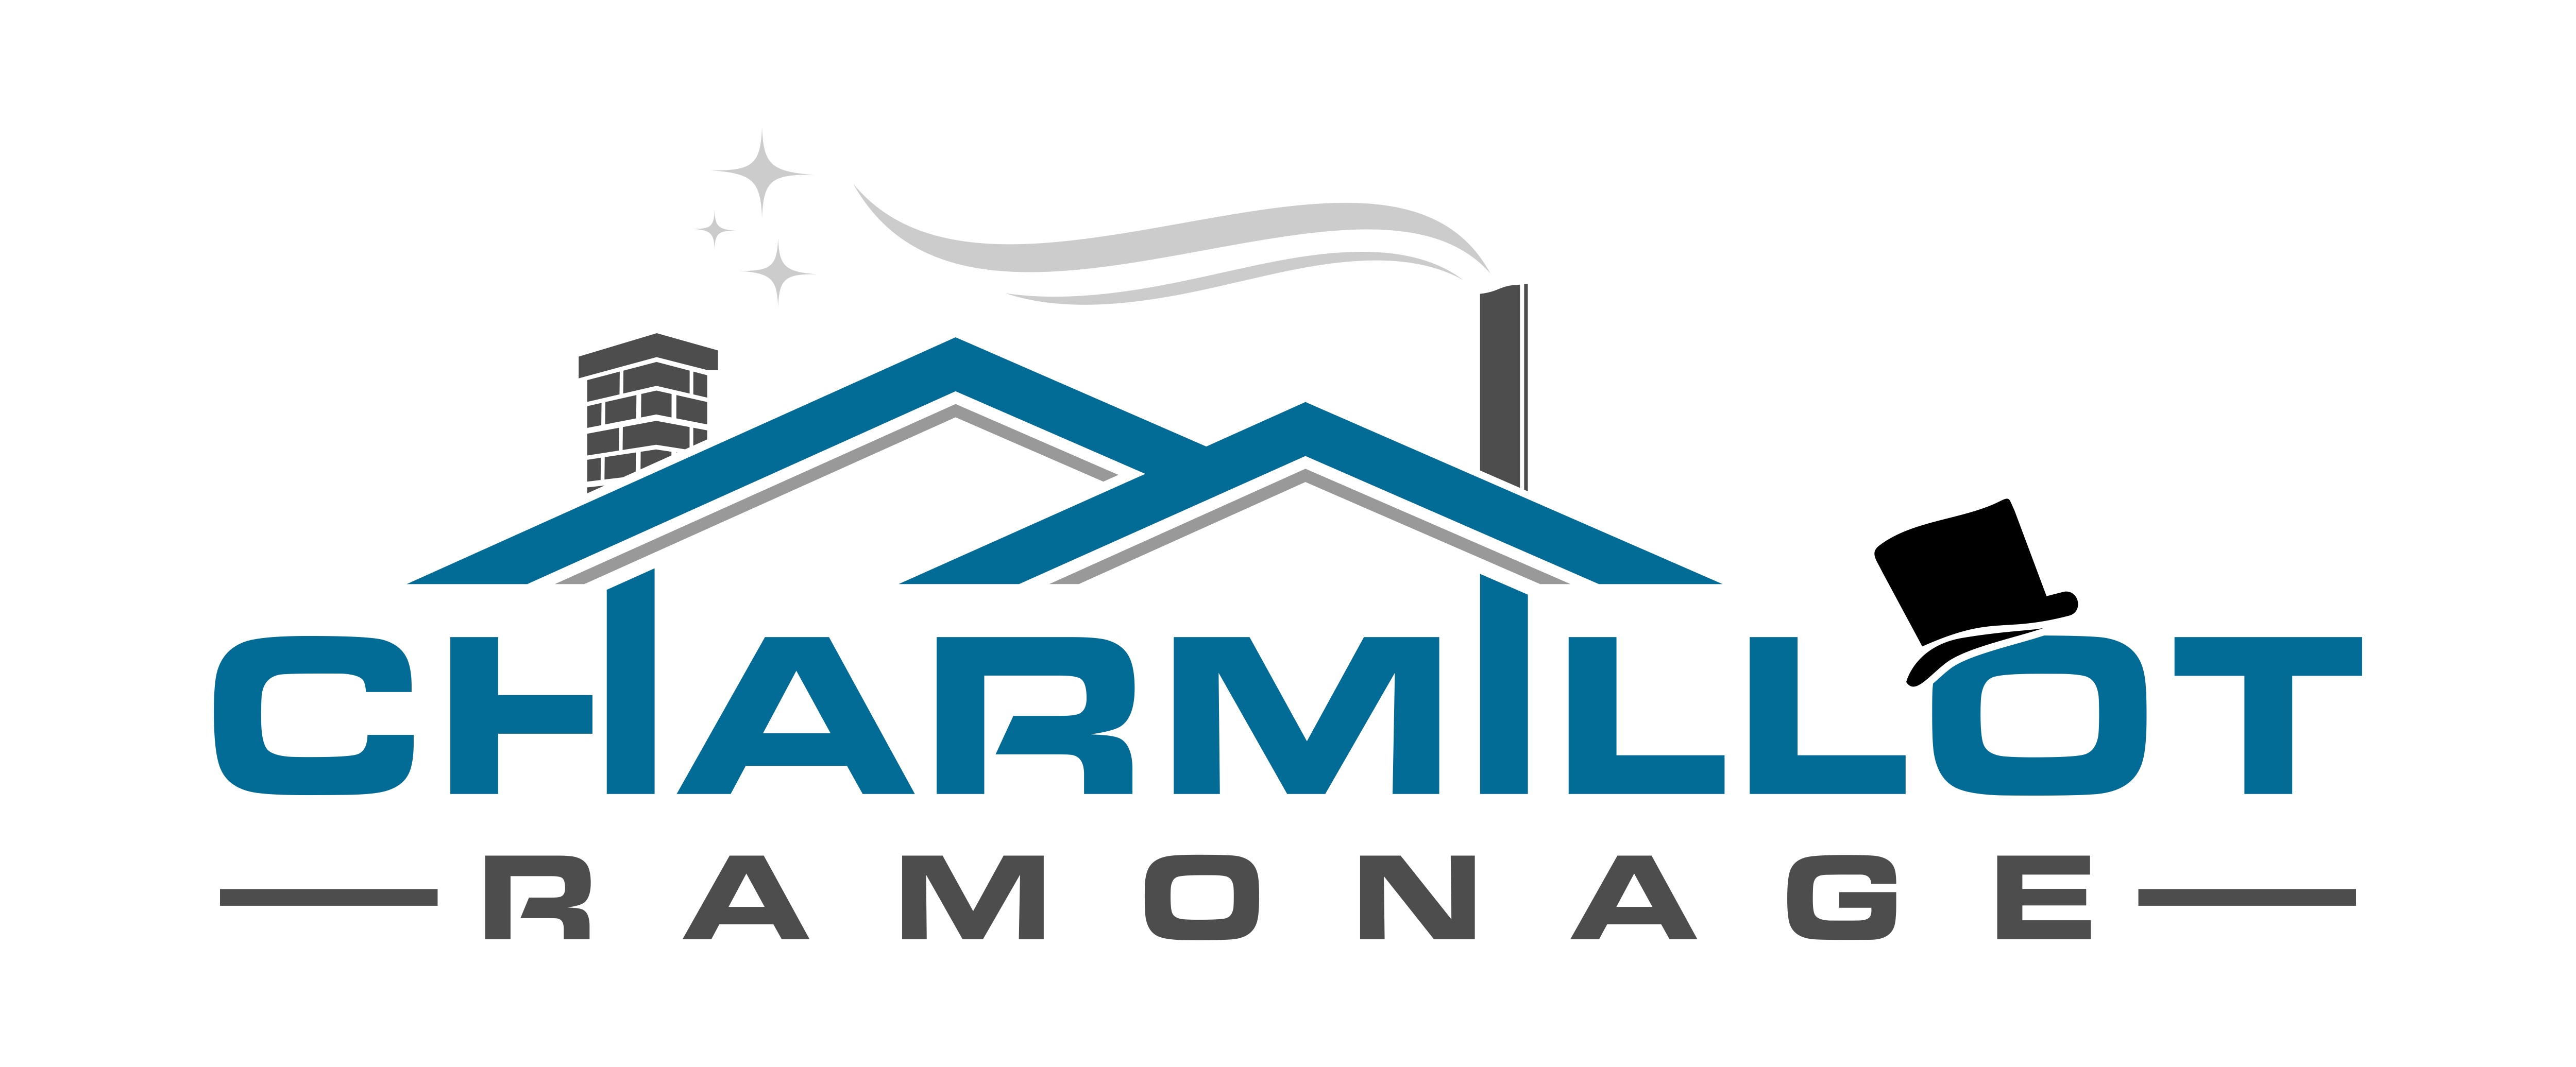 Charmillot Ramonage